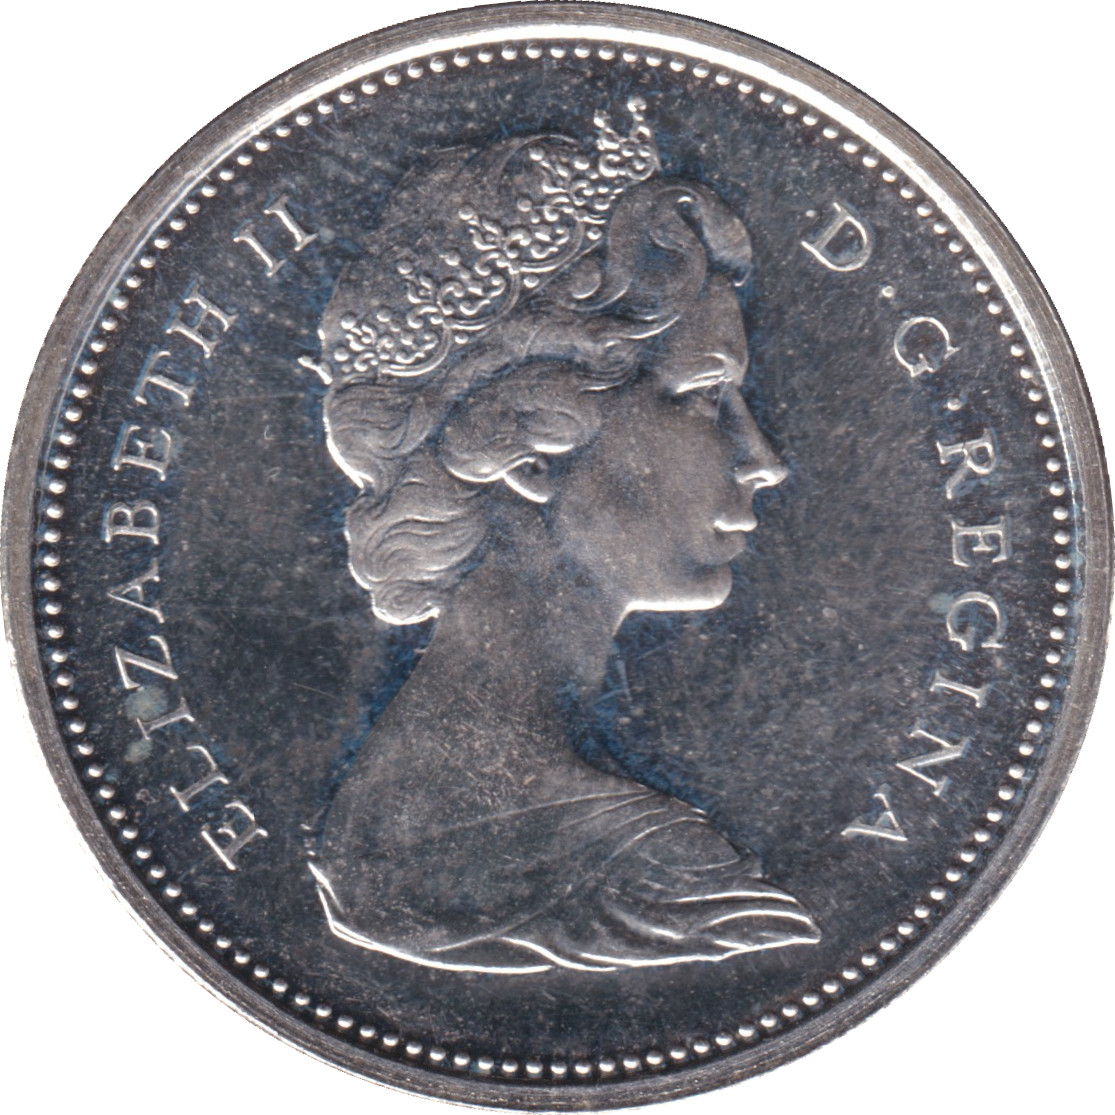 25 cents - Elizabeth II - Buste mature